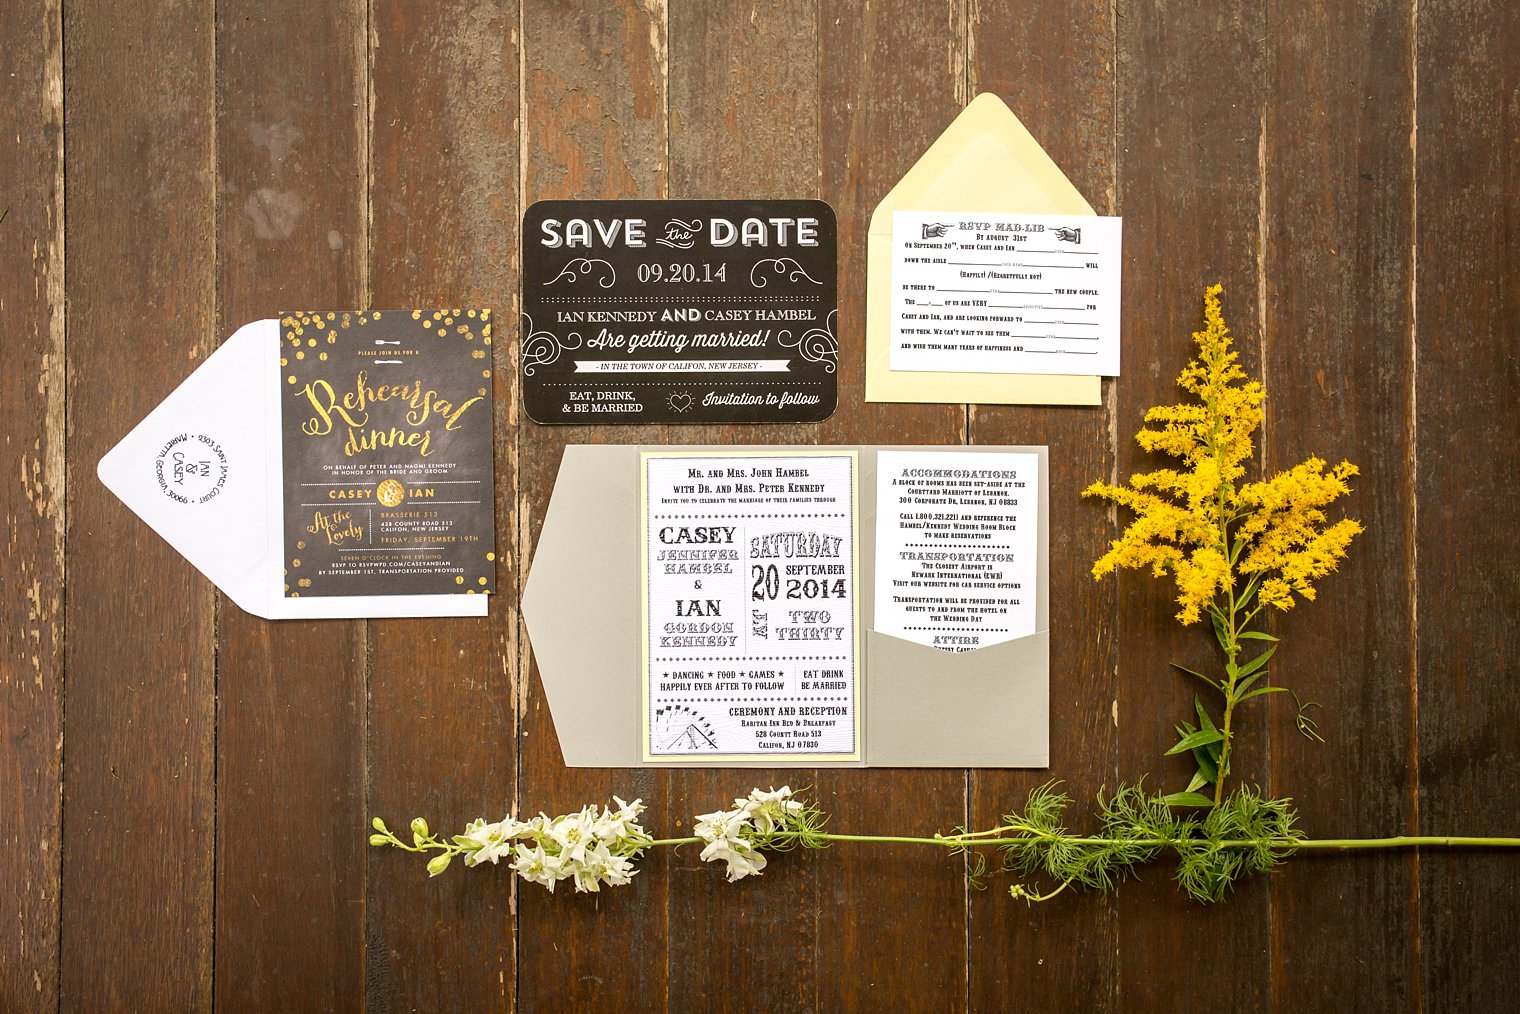 NJ Farmhouse Wedding rustic invitations